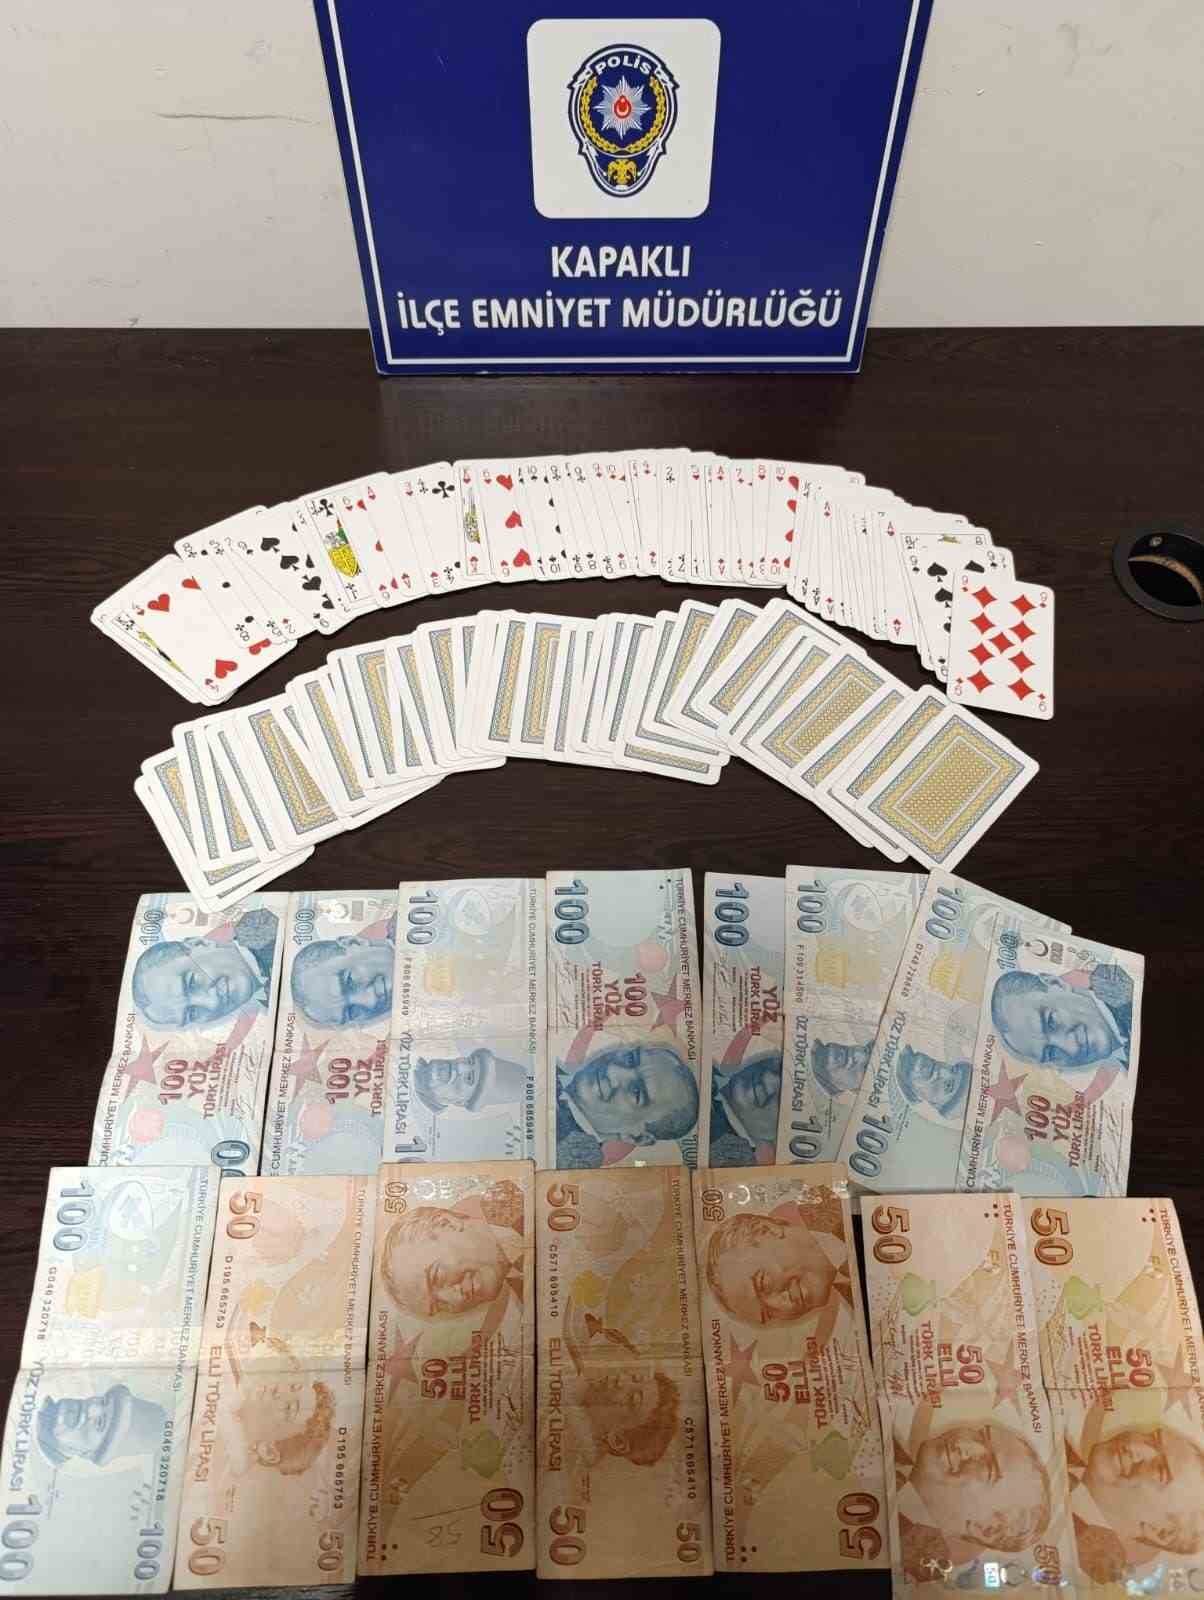 Kumar Oynayan 4 Kişi Suçüstü Yakalandı: 25 Bin Lira Ceza Kesildi